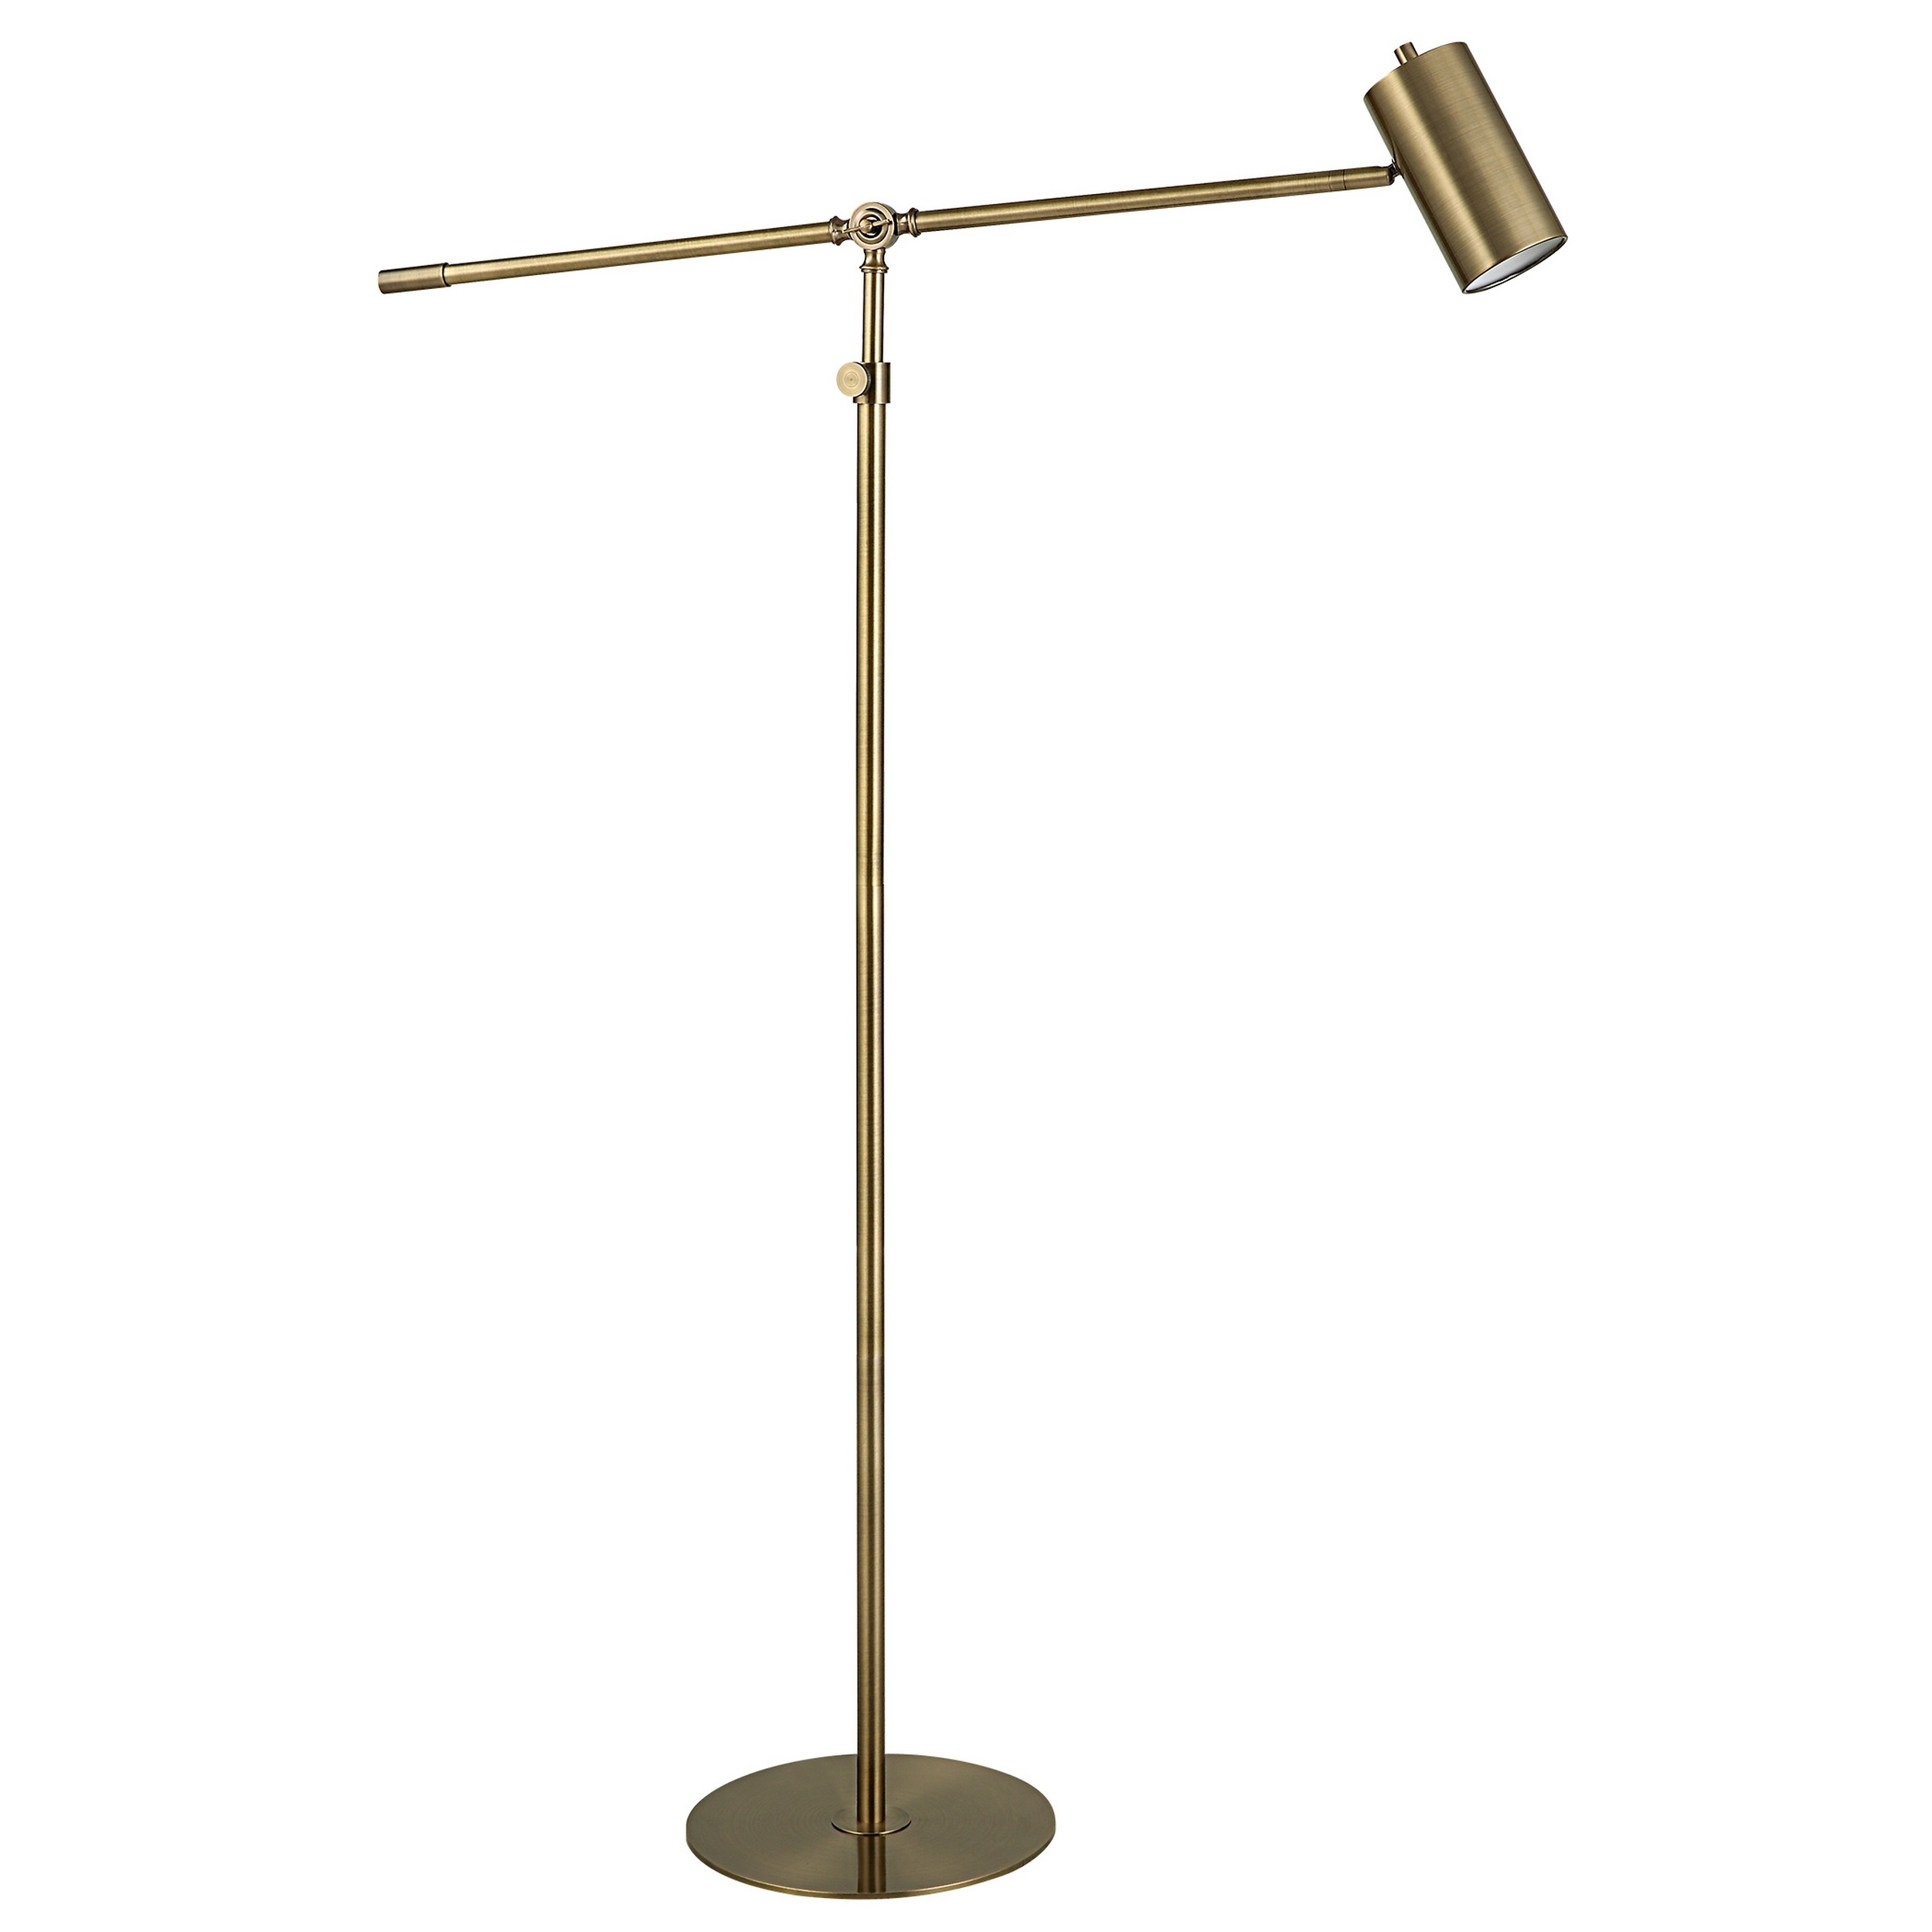 60 Inch Floor Lamp, Adjustable Length, Metal Shade, Antique Brass Finish -Saltoro Sherpi